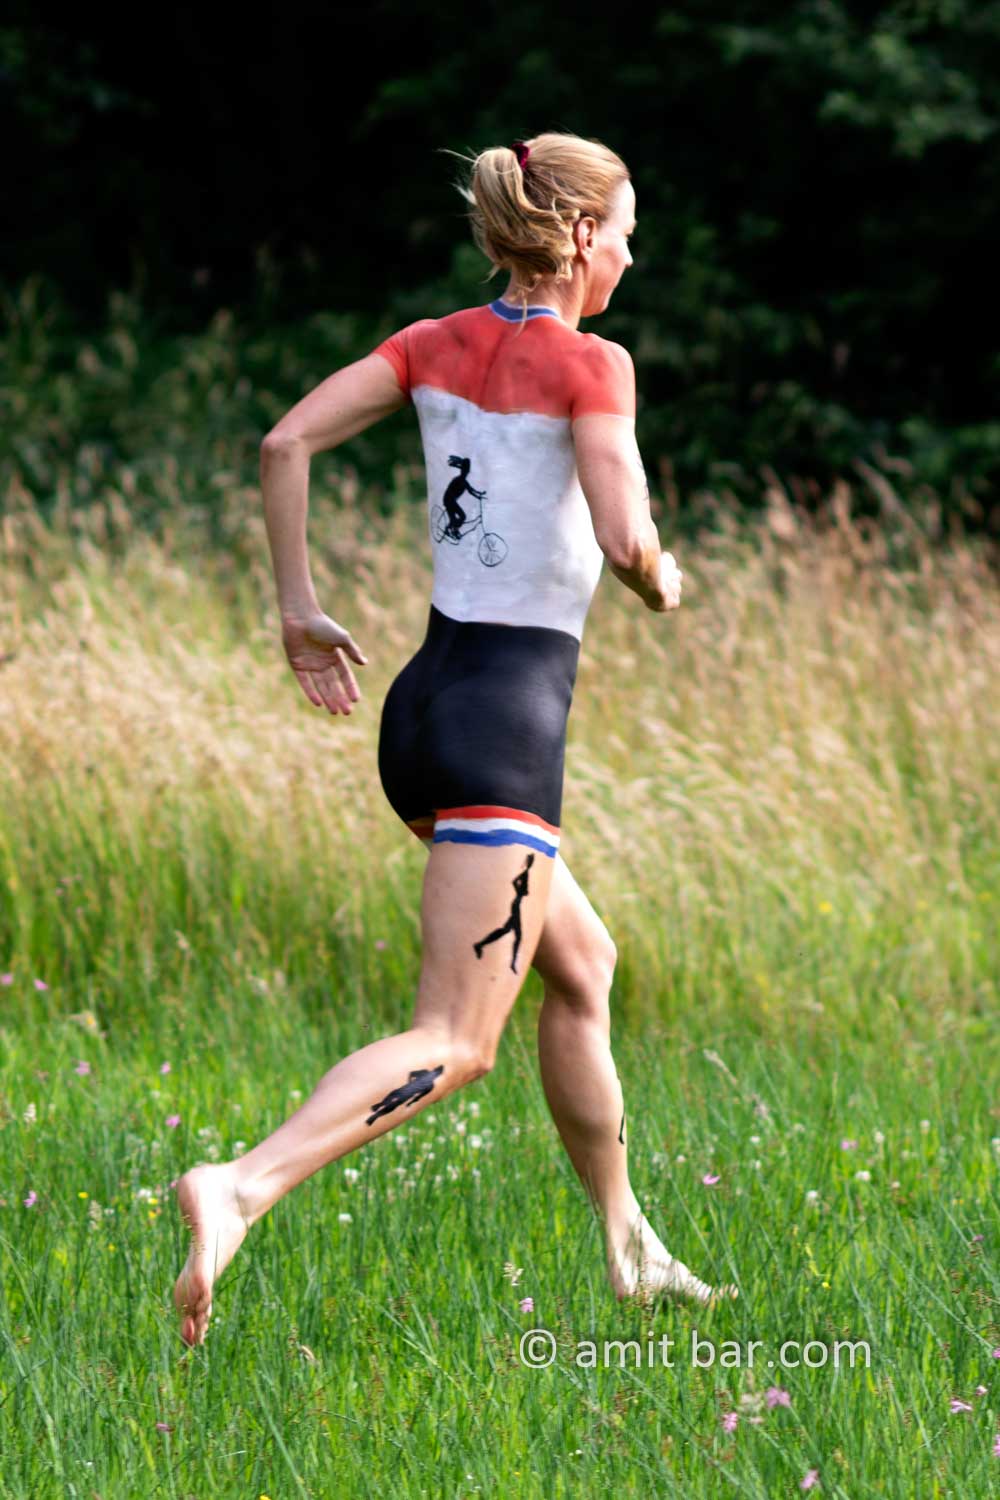 Triathlon athlete III: Body-painted triathlon athlete is running